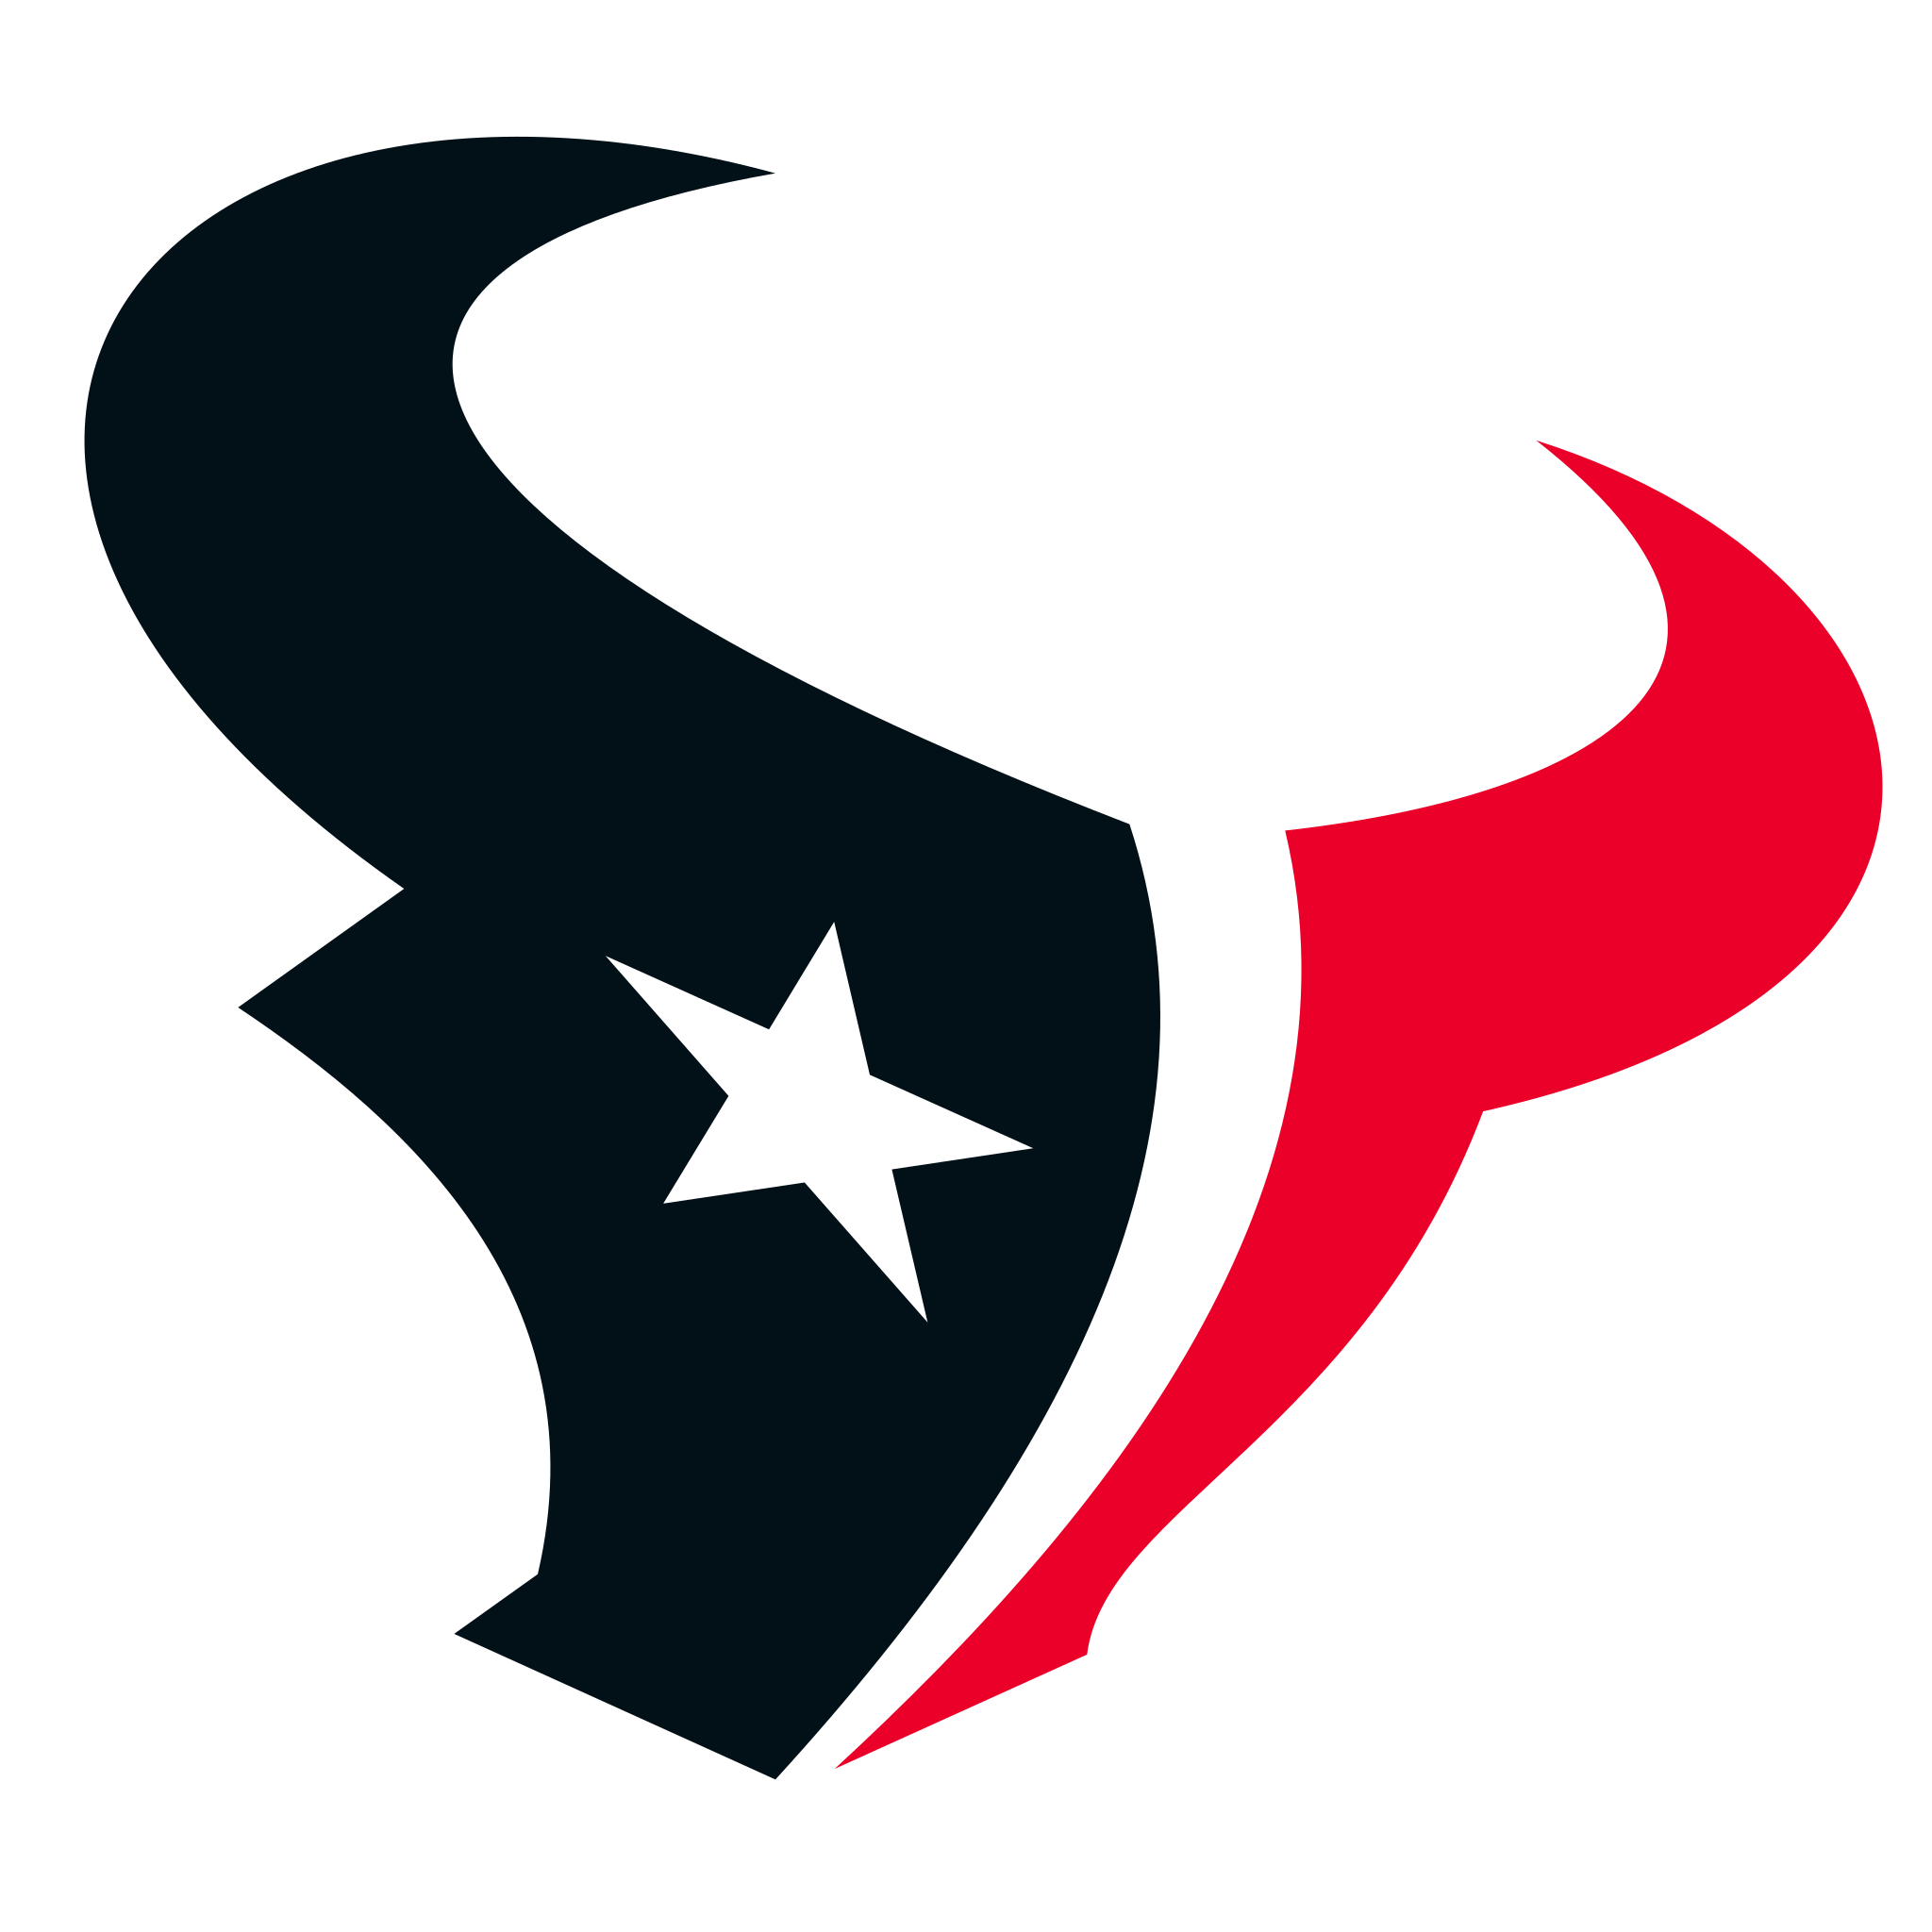 Houston Texans - Wikipedia